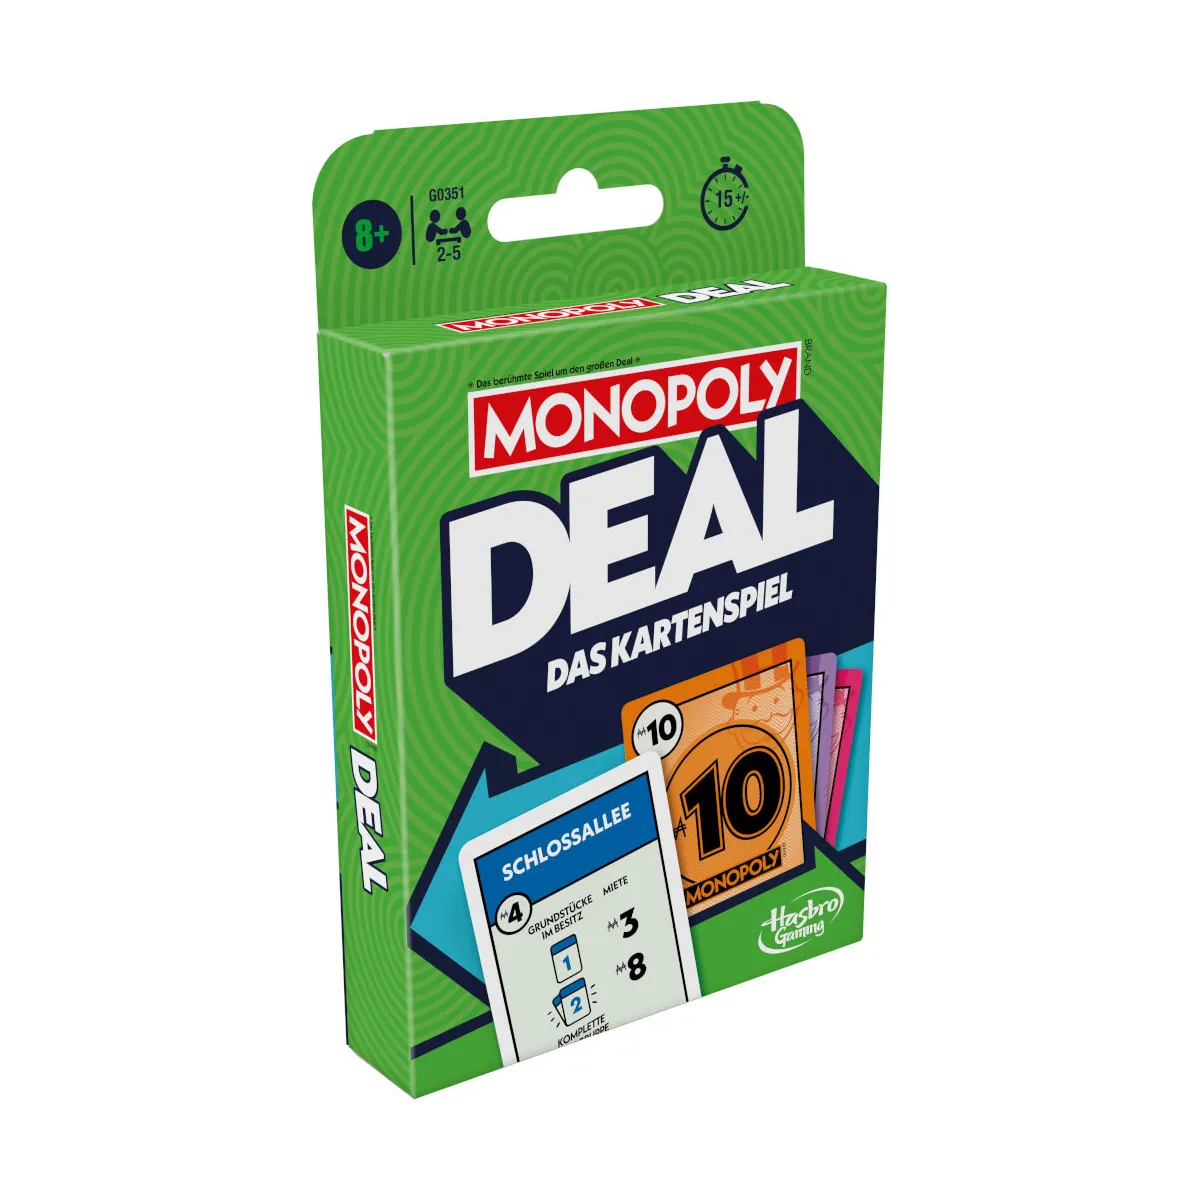 Monopoly Deal Kartenspiel G0351100